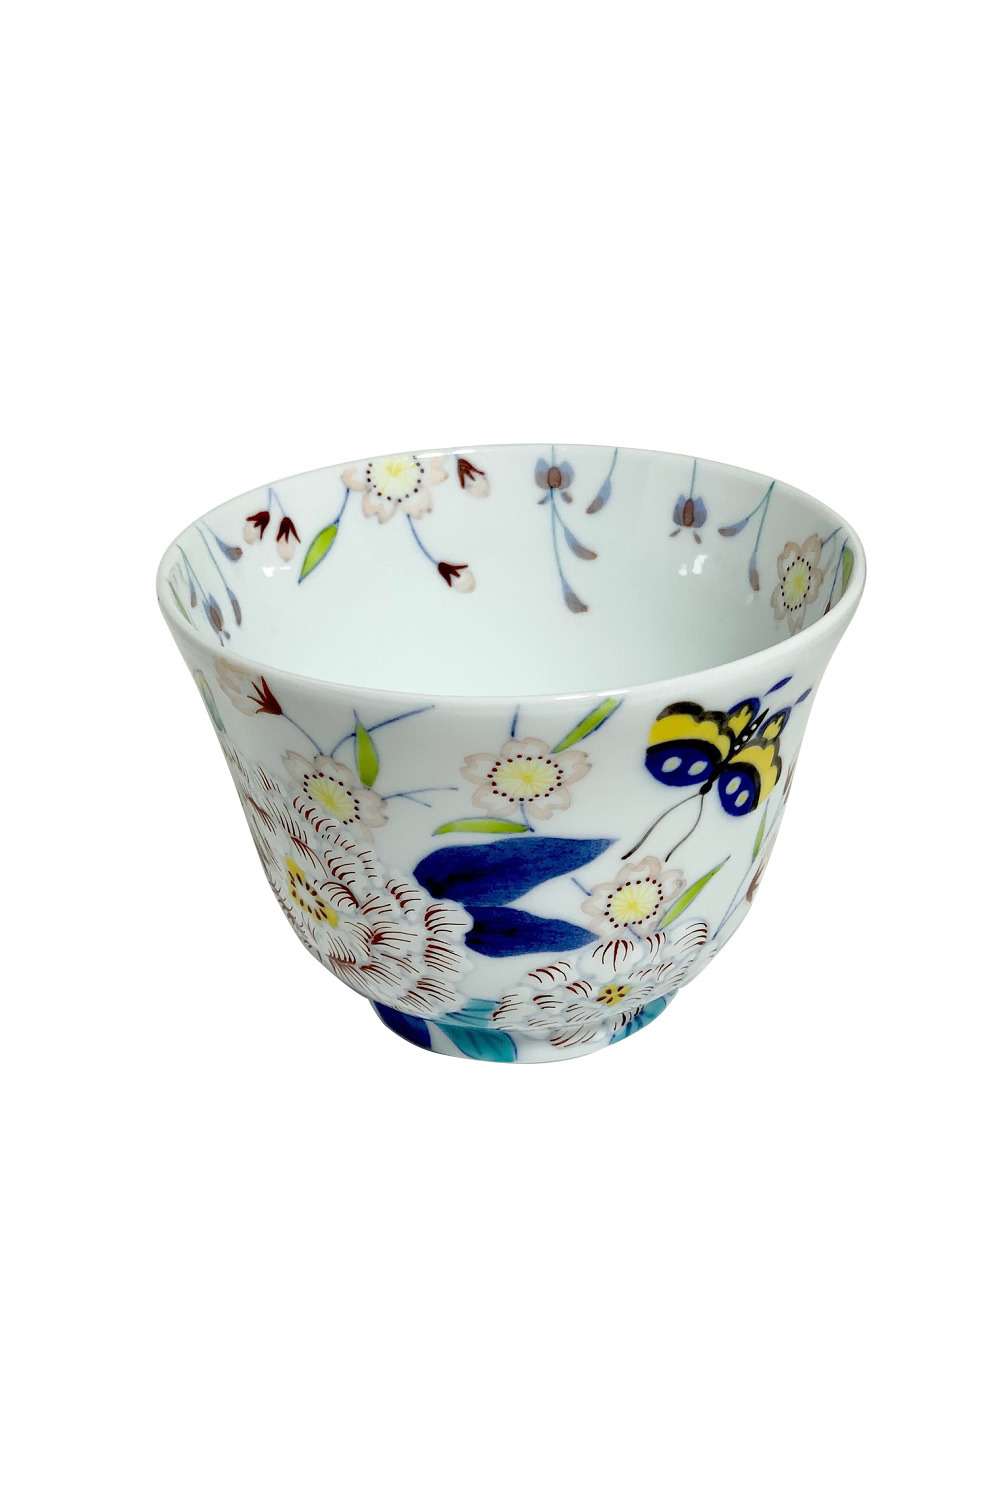 KEITAMARUYAMA オリジナル陶器【花と蝶】 詳細画像 マルチ